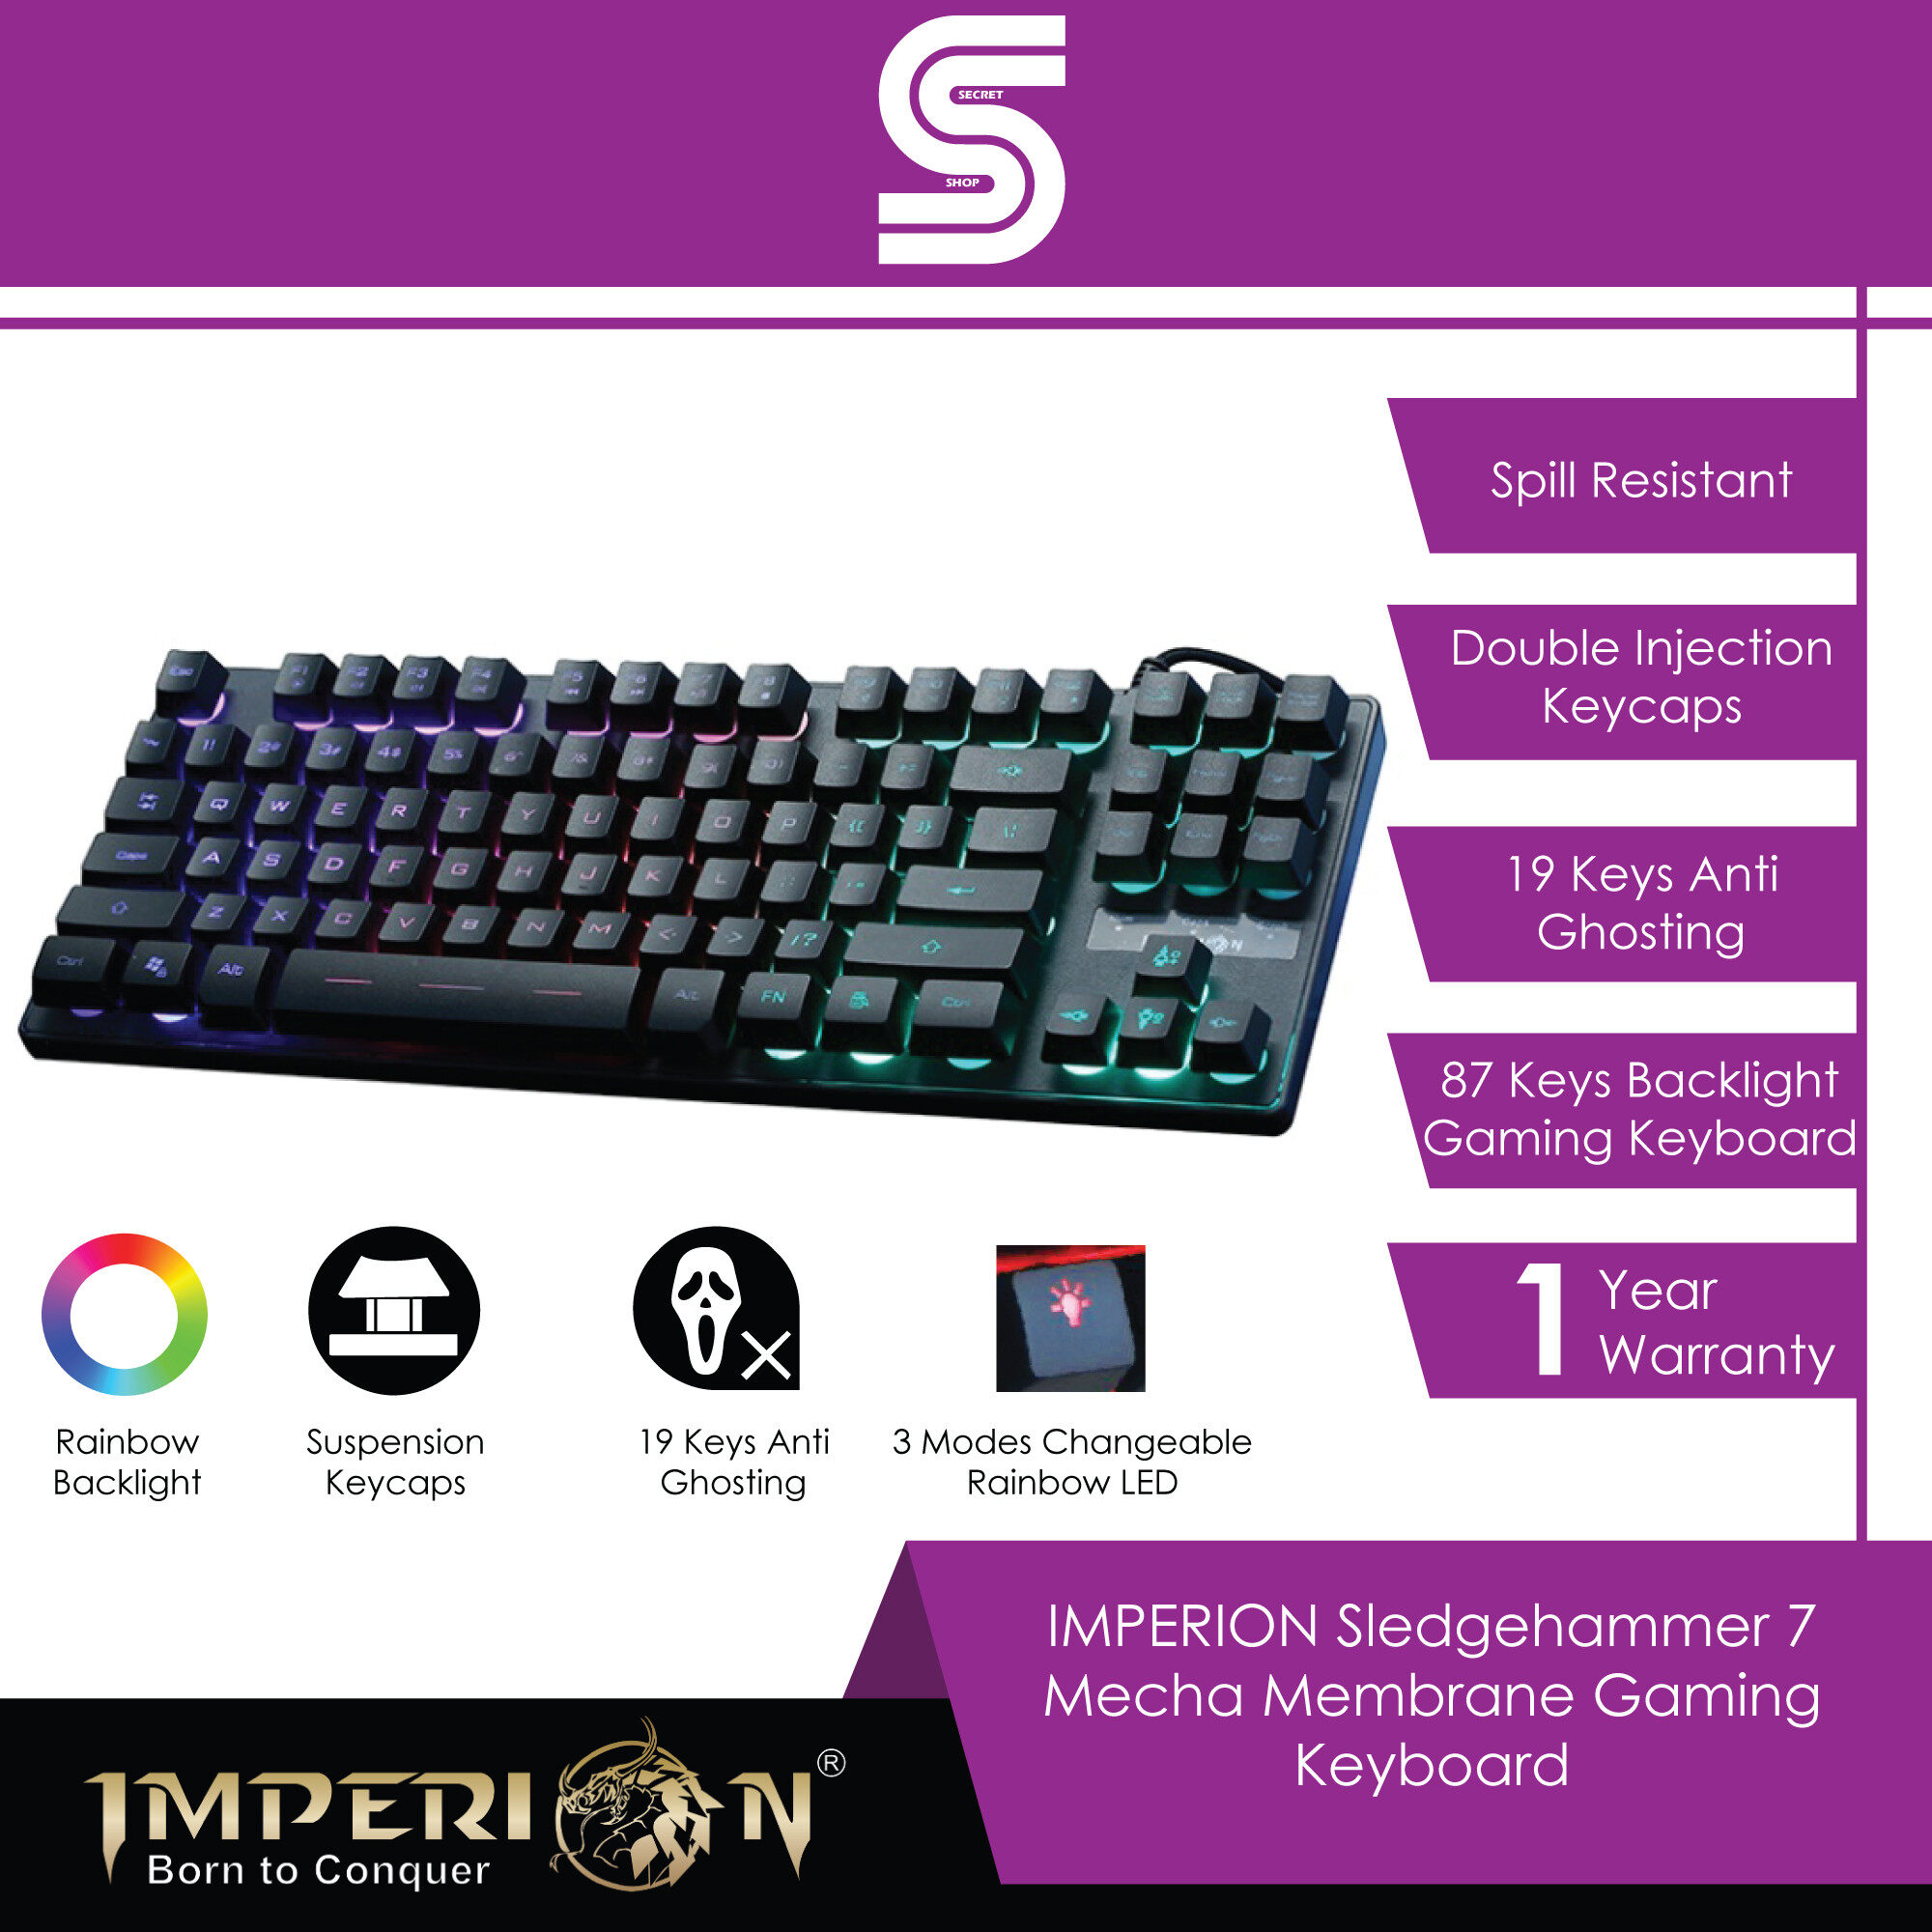 IMPERION Sledgehammer 7 Mecha Membrane Gaming Keyboard